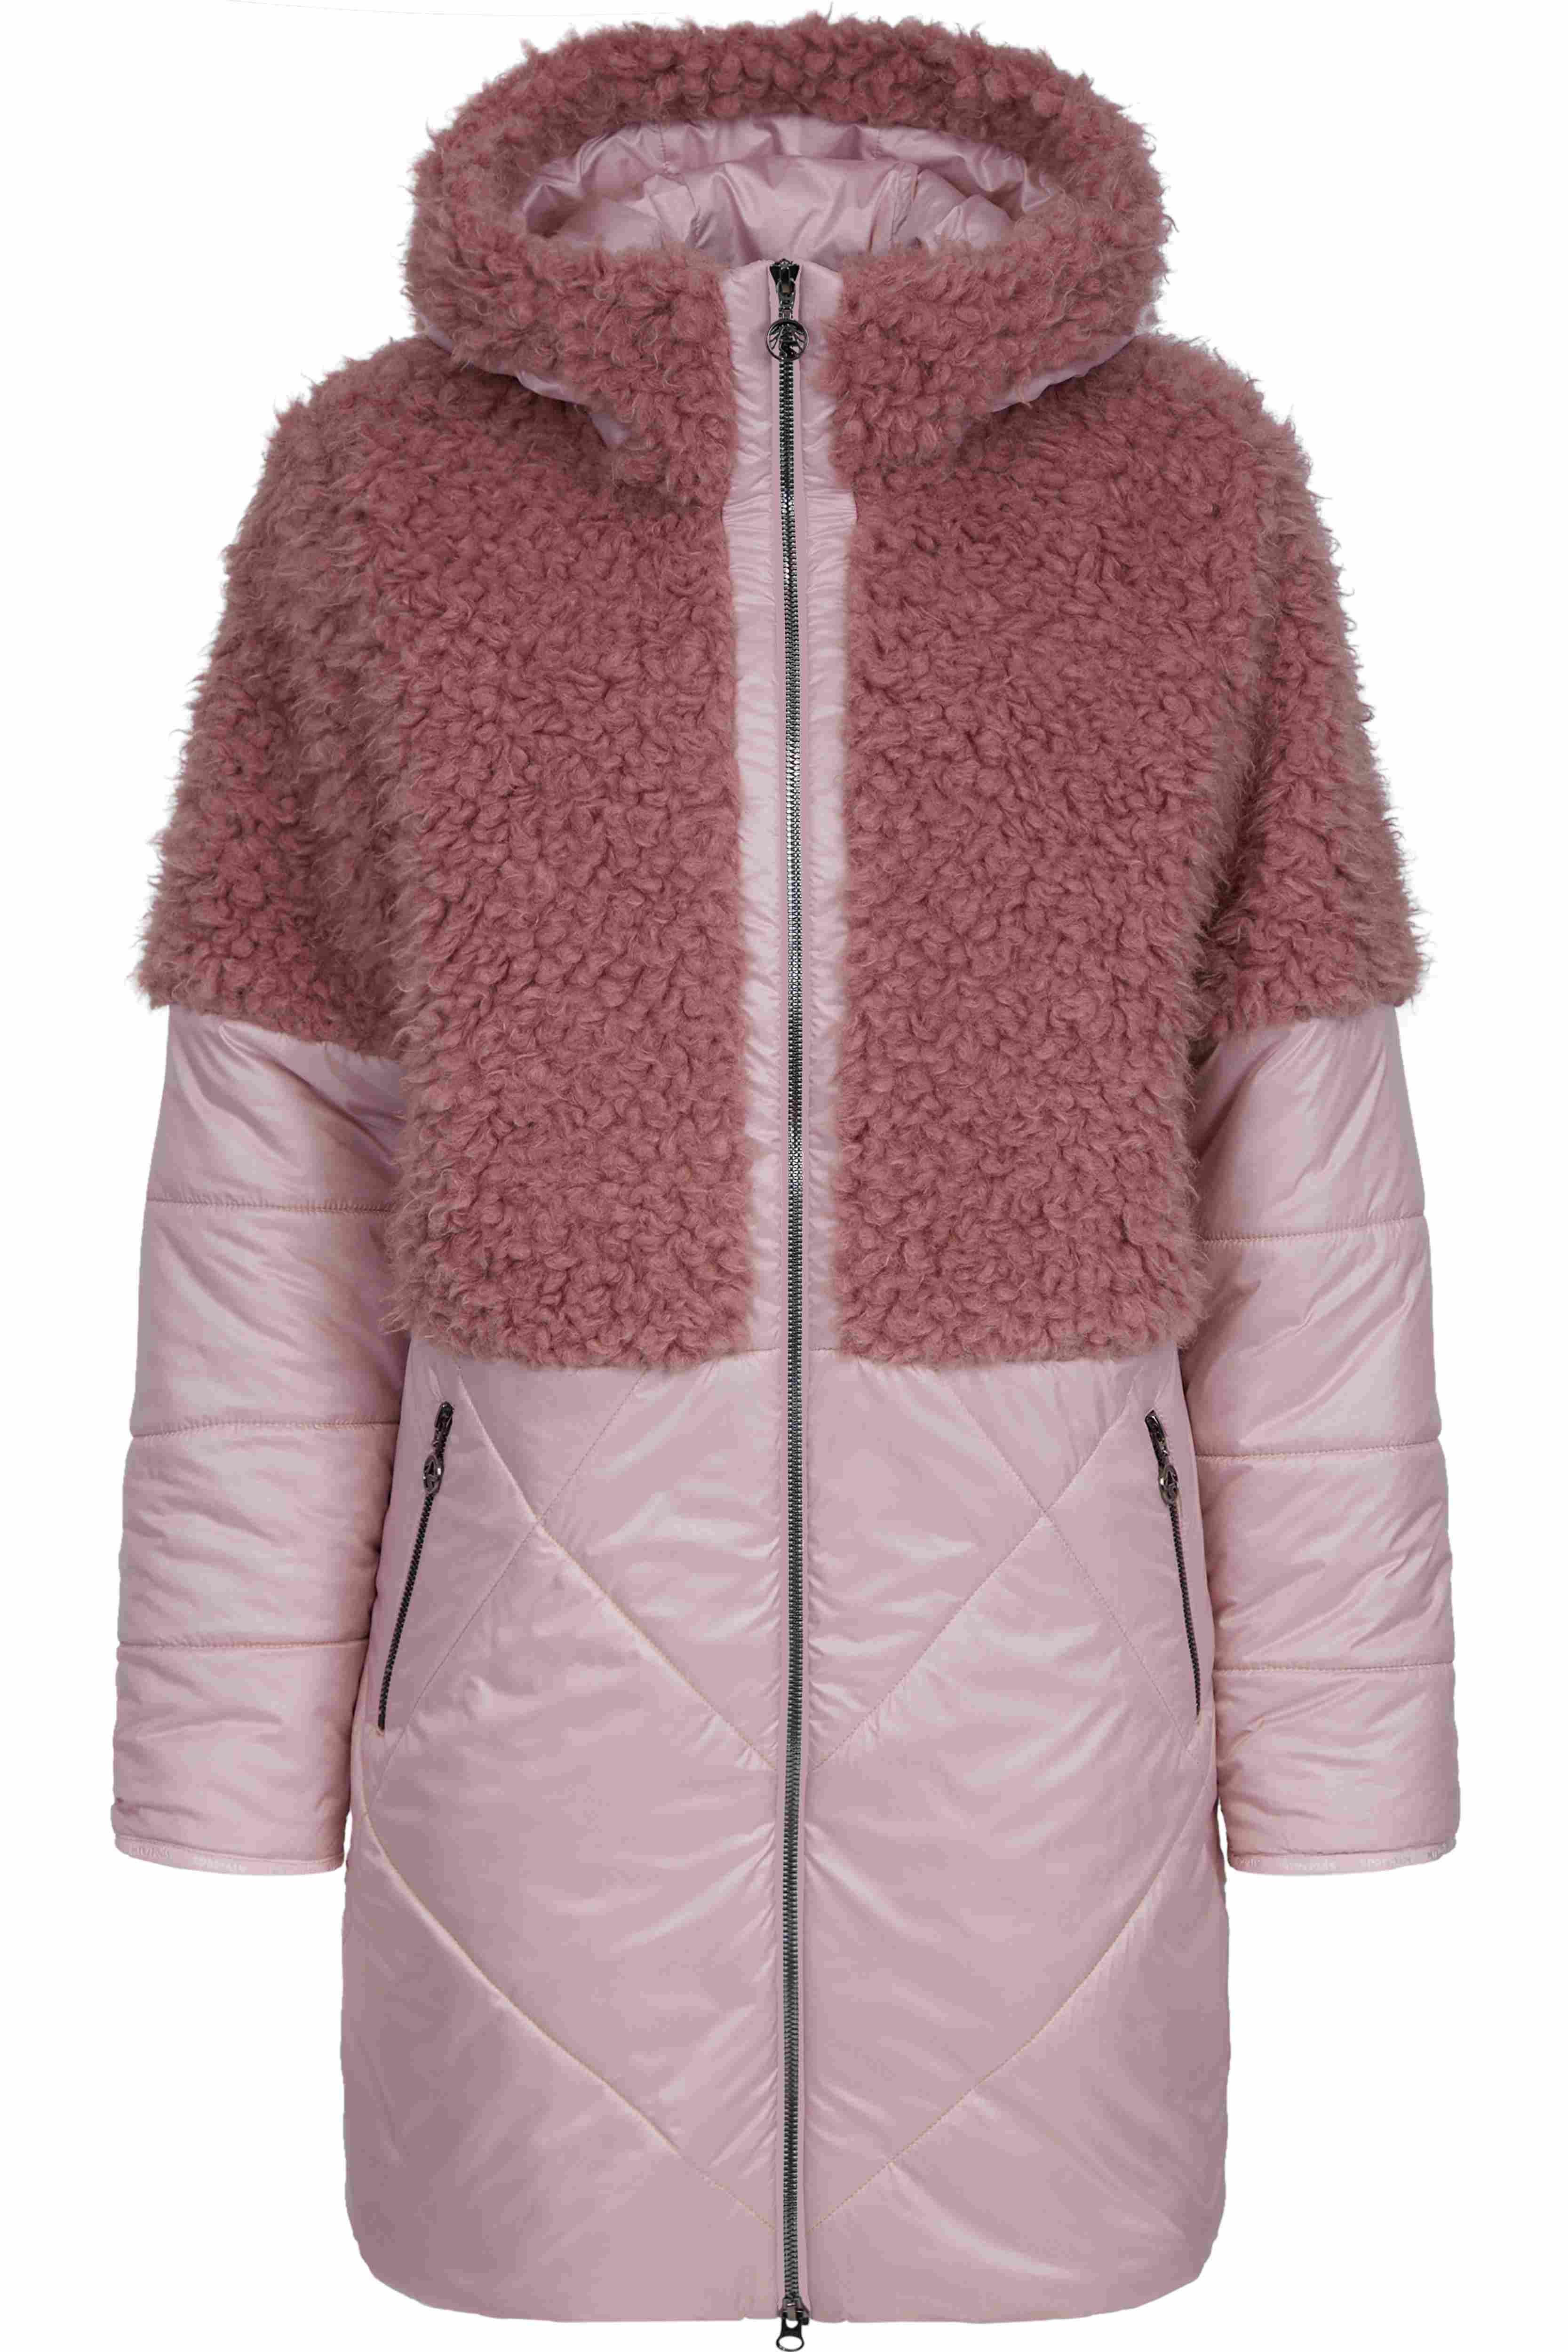 Sportalm kabát Rab m.K. dawn pink Velikost: 38